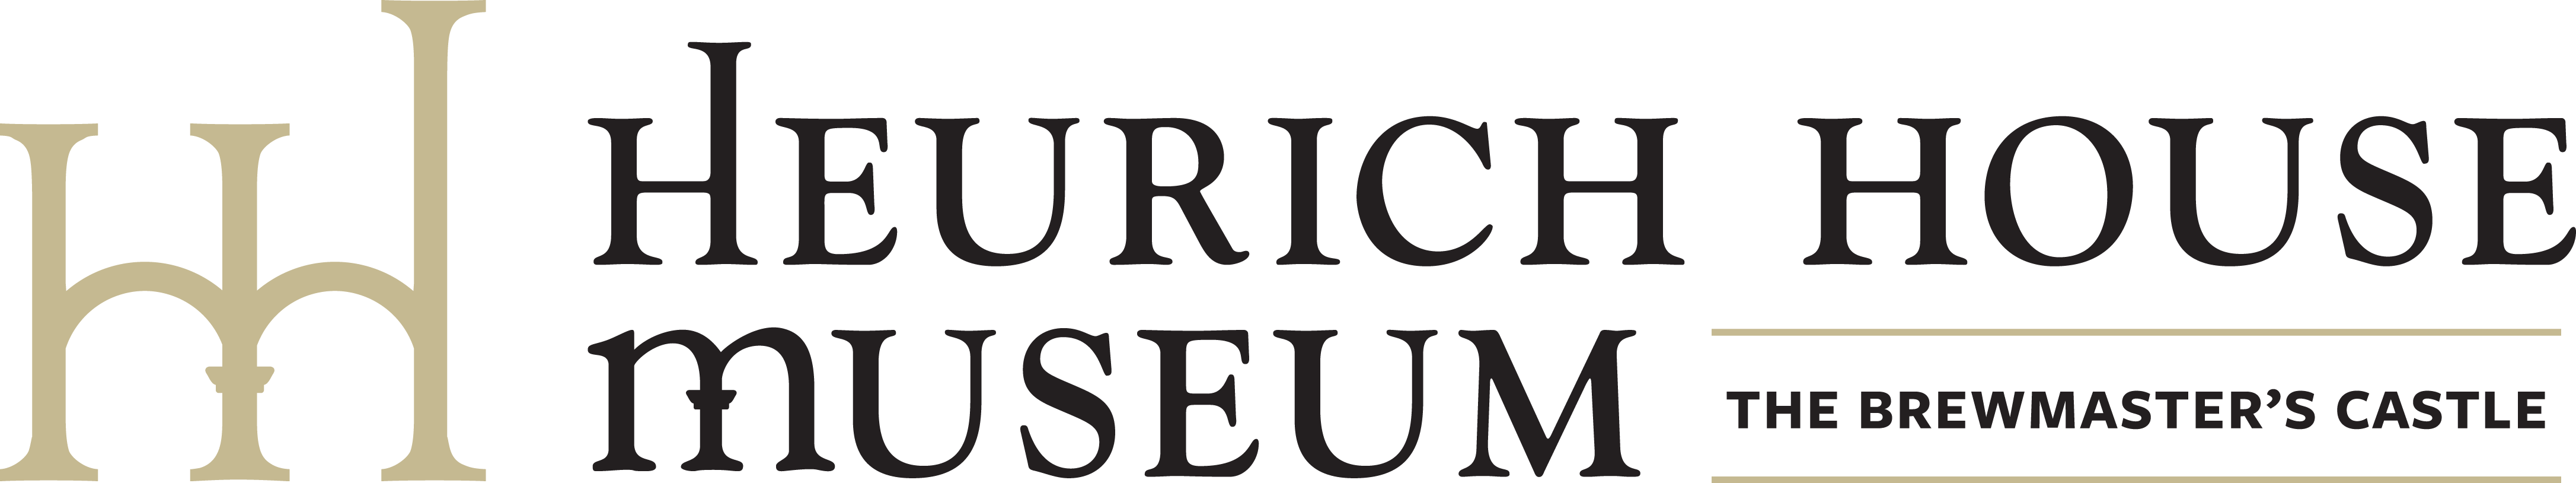 Heurich House Logo